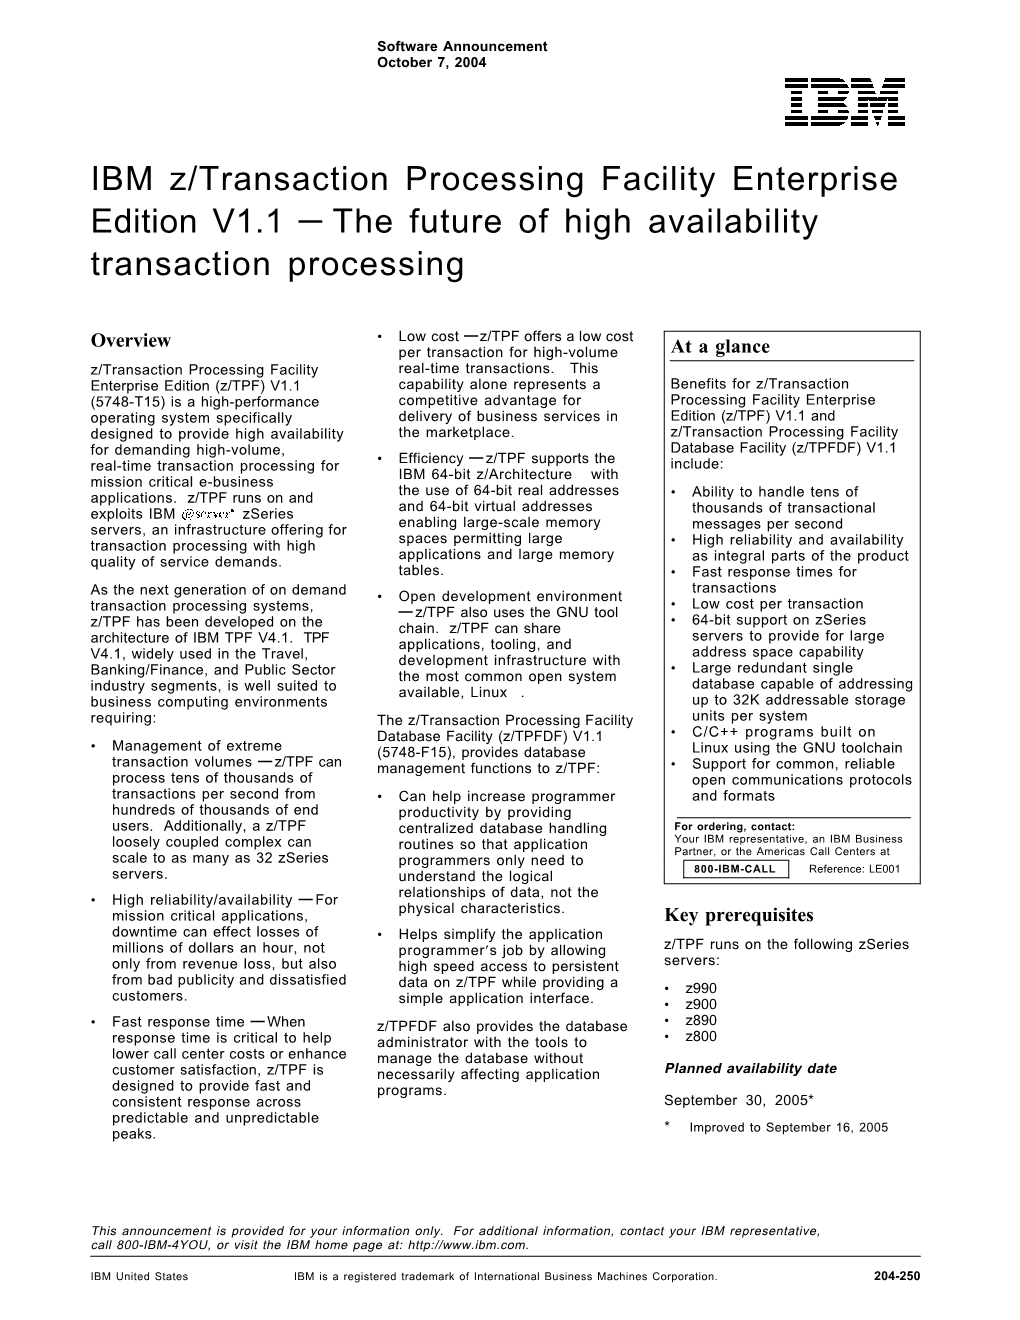 IBM Z/Transaction Processing Facility Enterprise Edition V1.1 — the Future of High Availability Transaction Processing